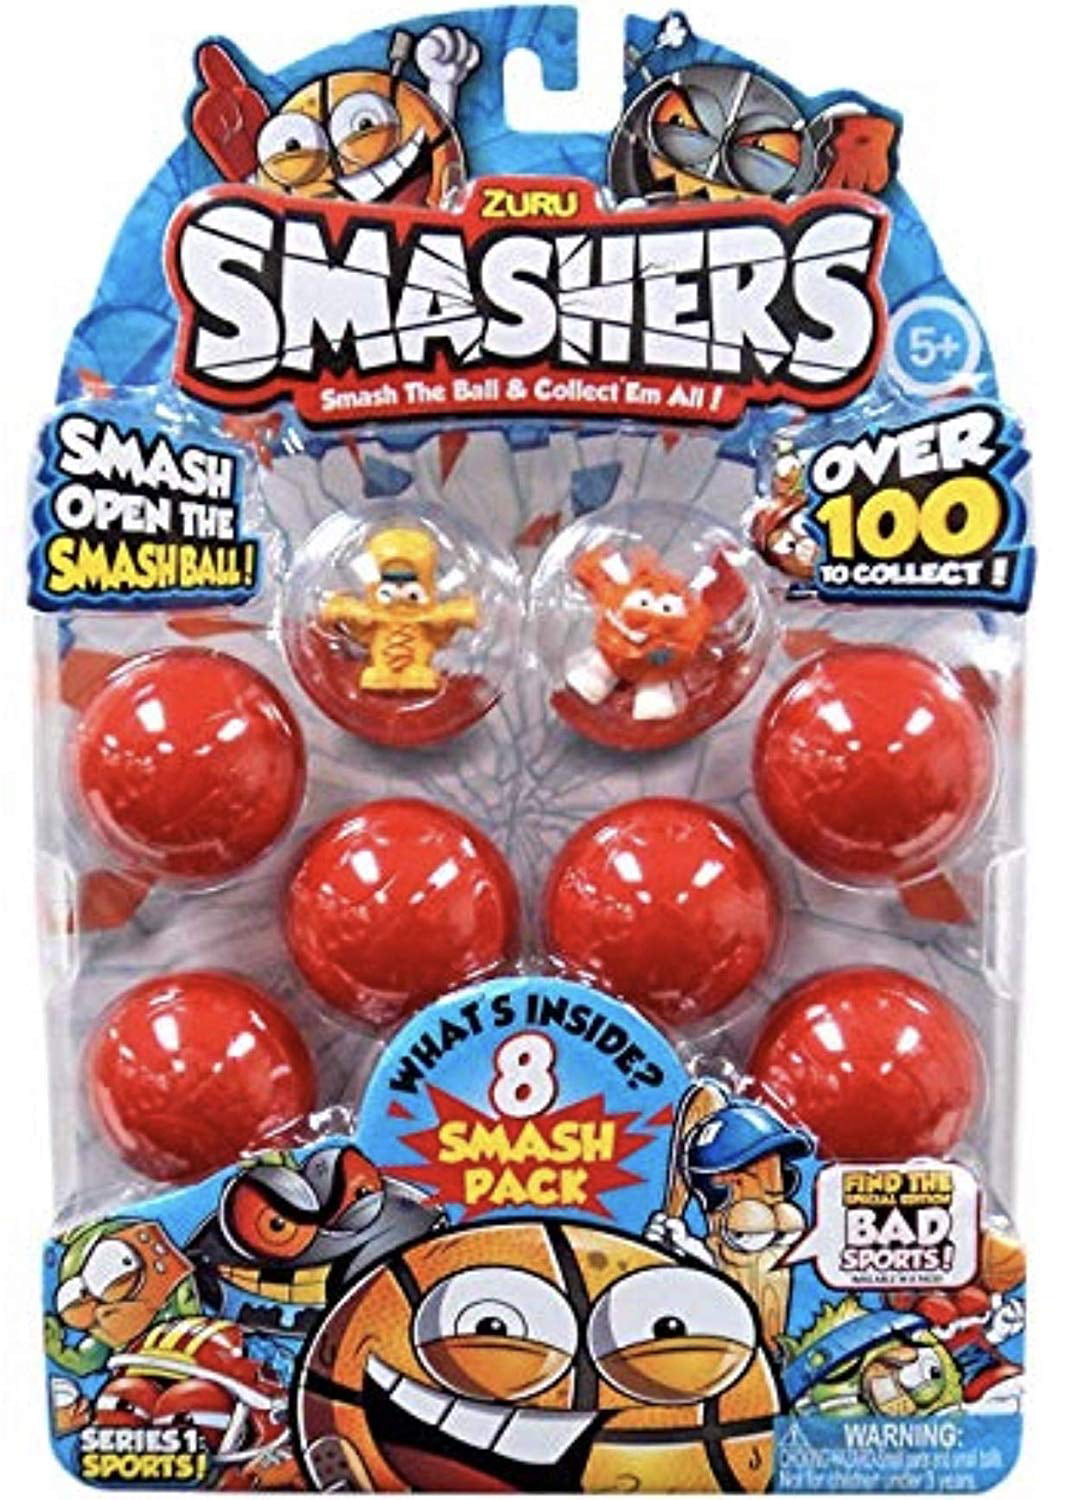 X5 ZURU Smashers Sports Series 1 Figures for sale online 5 Packs